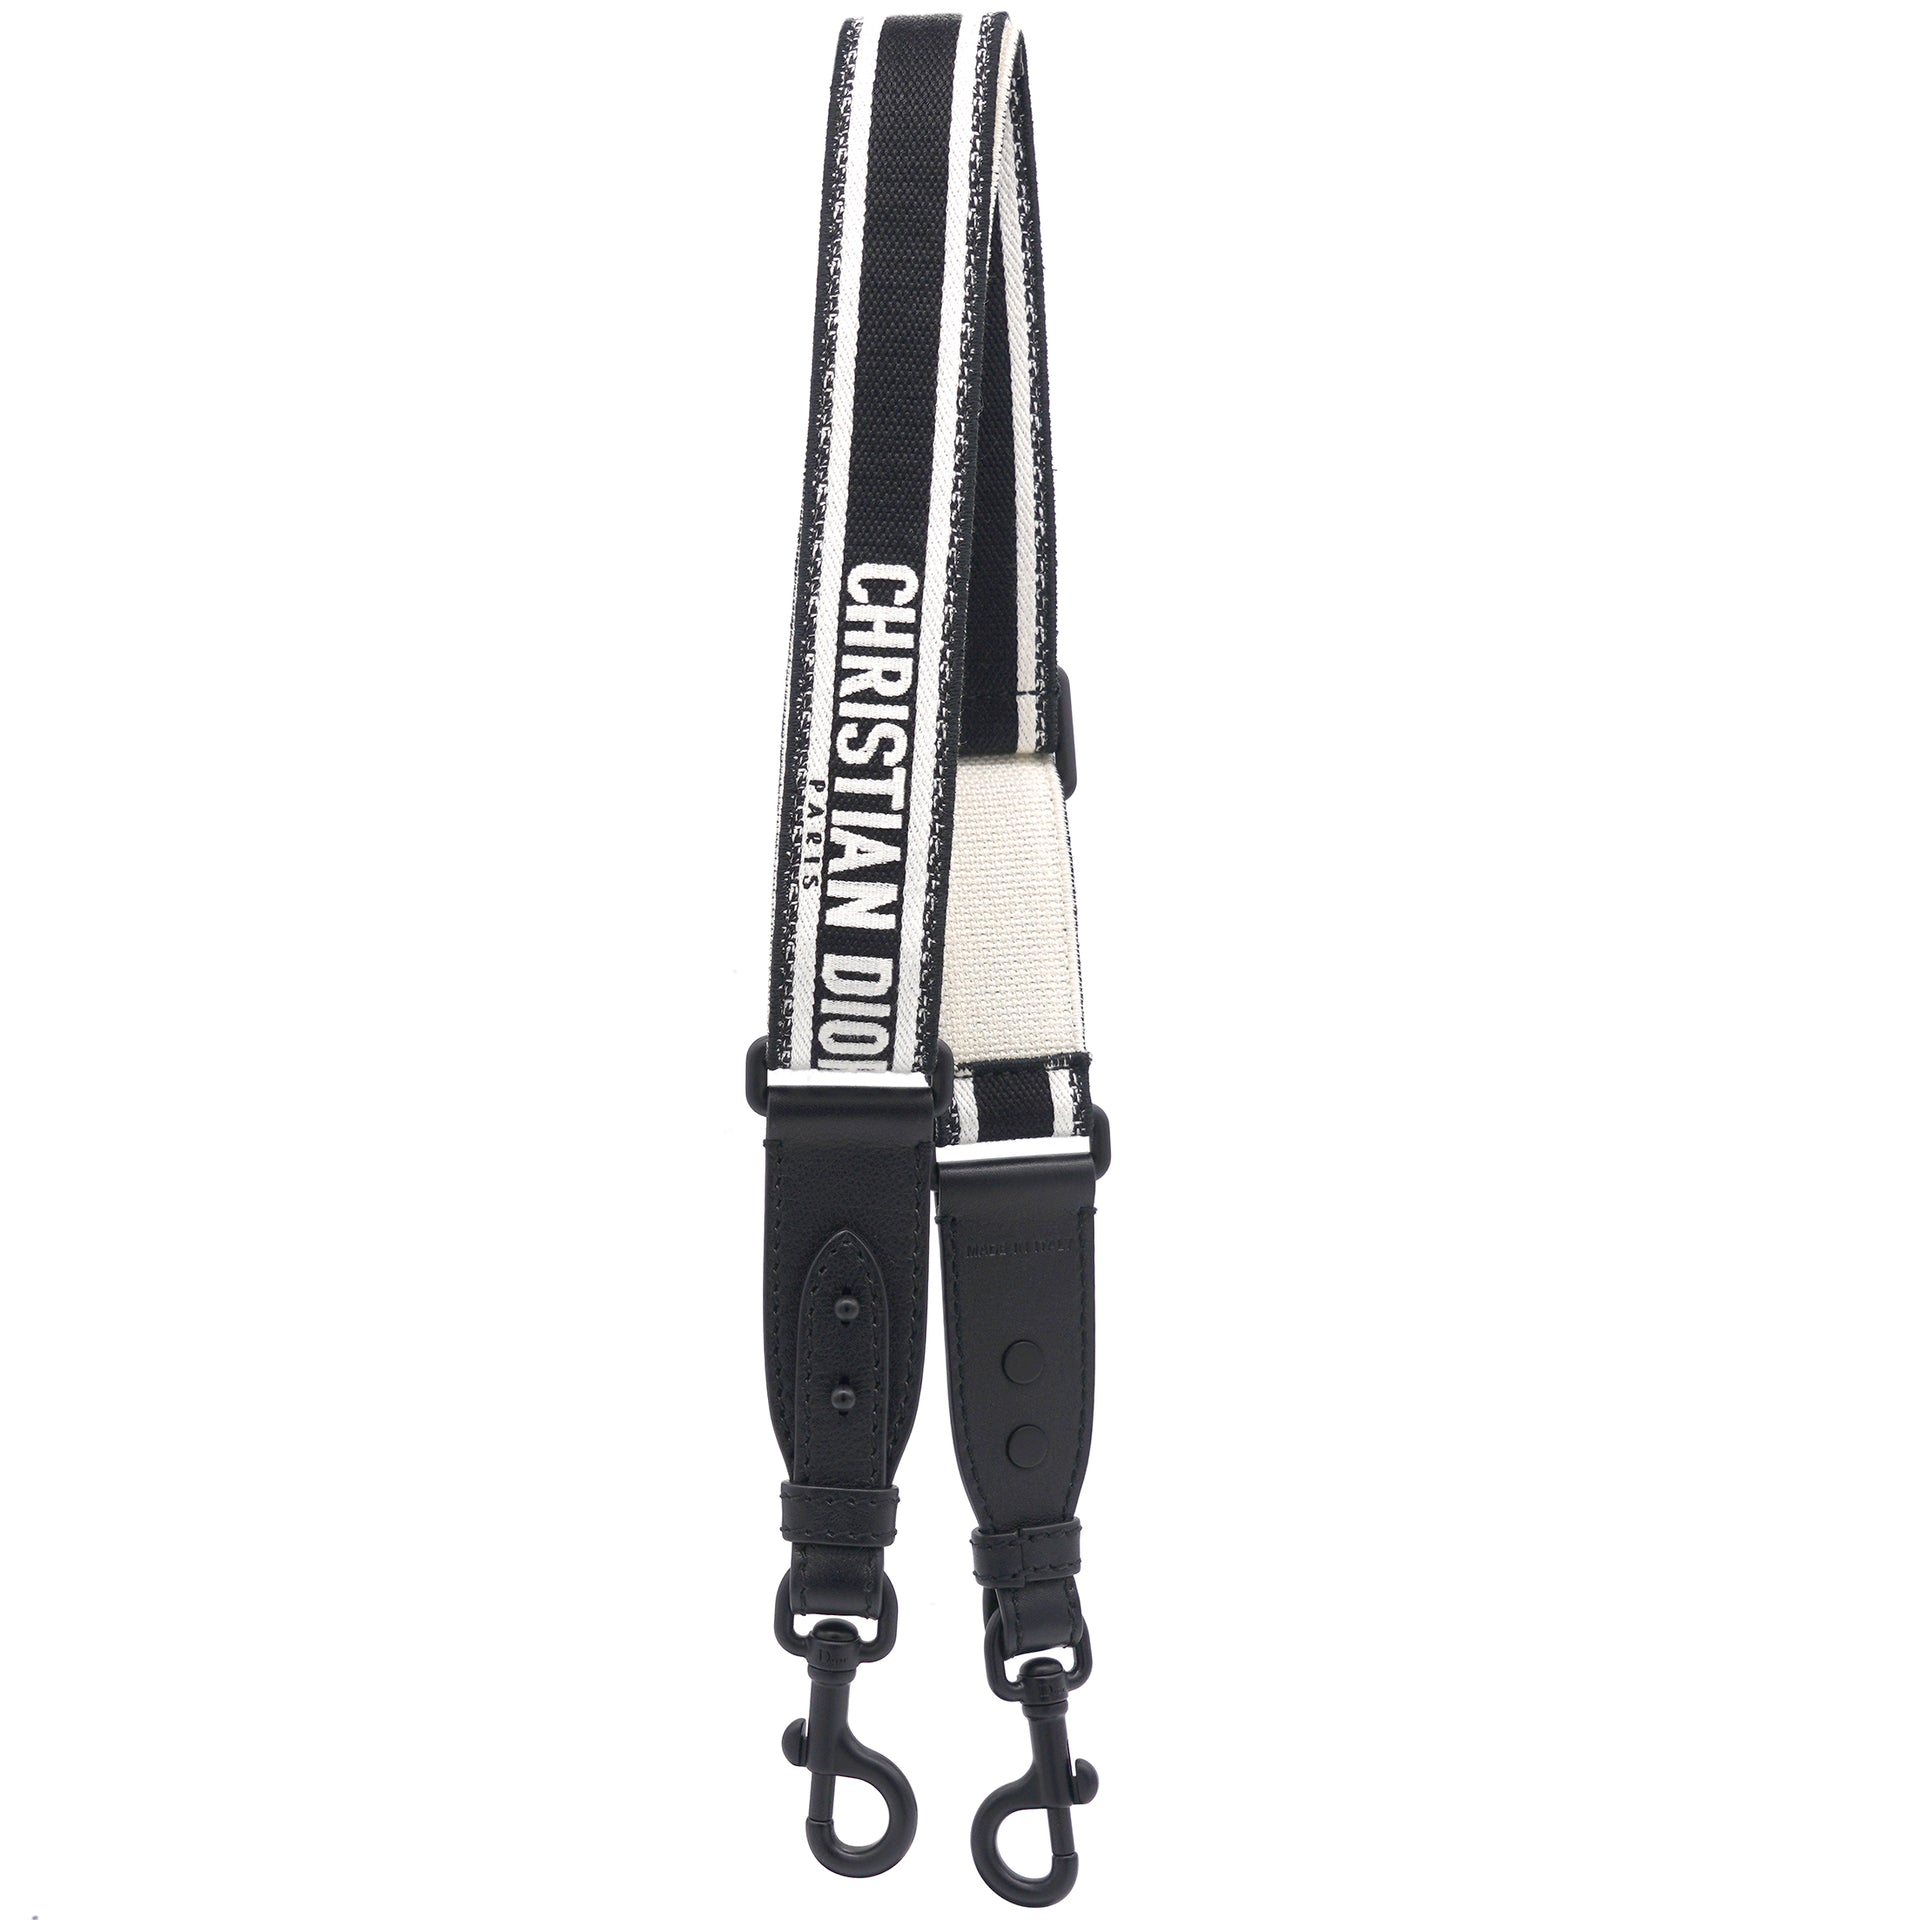 Adjustable Shoulder Strap with Ring Black 'CHRISTIAN DIOR' Embroidery